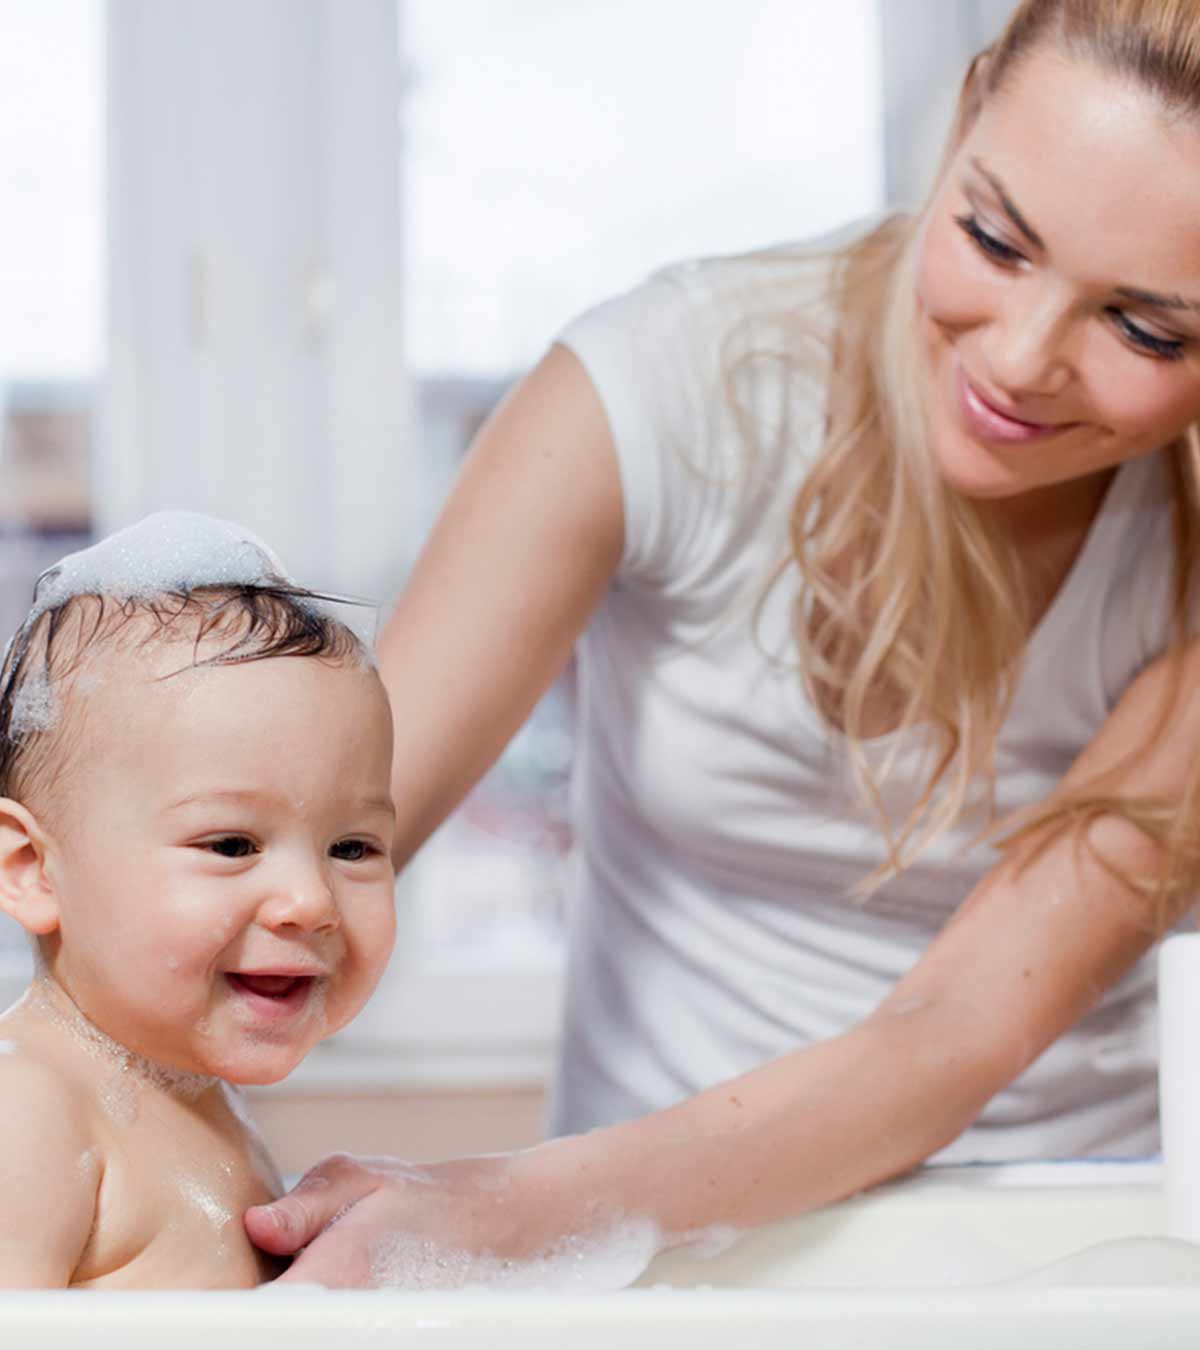 Epsom Salt Bath For Babies: Safety, Benefits, And Precautions